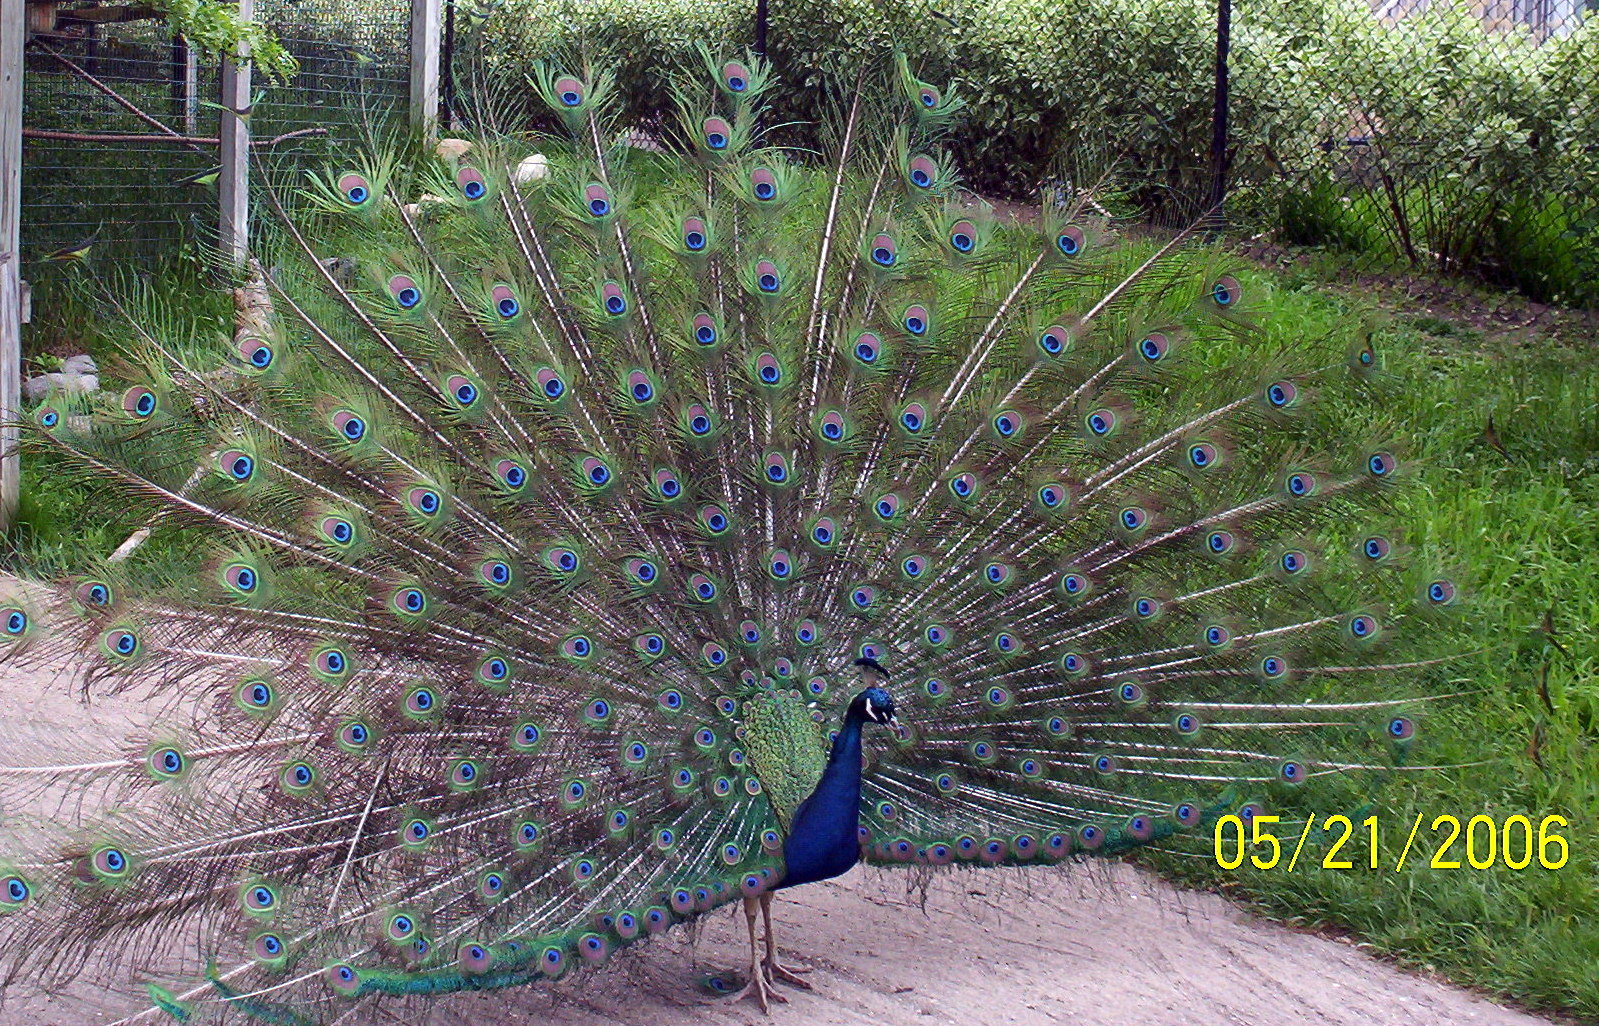 Peacock at Full Glory!